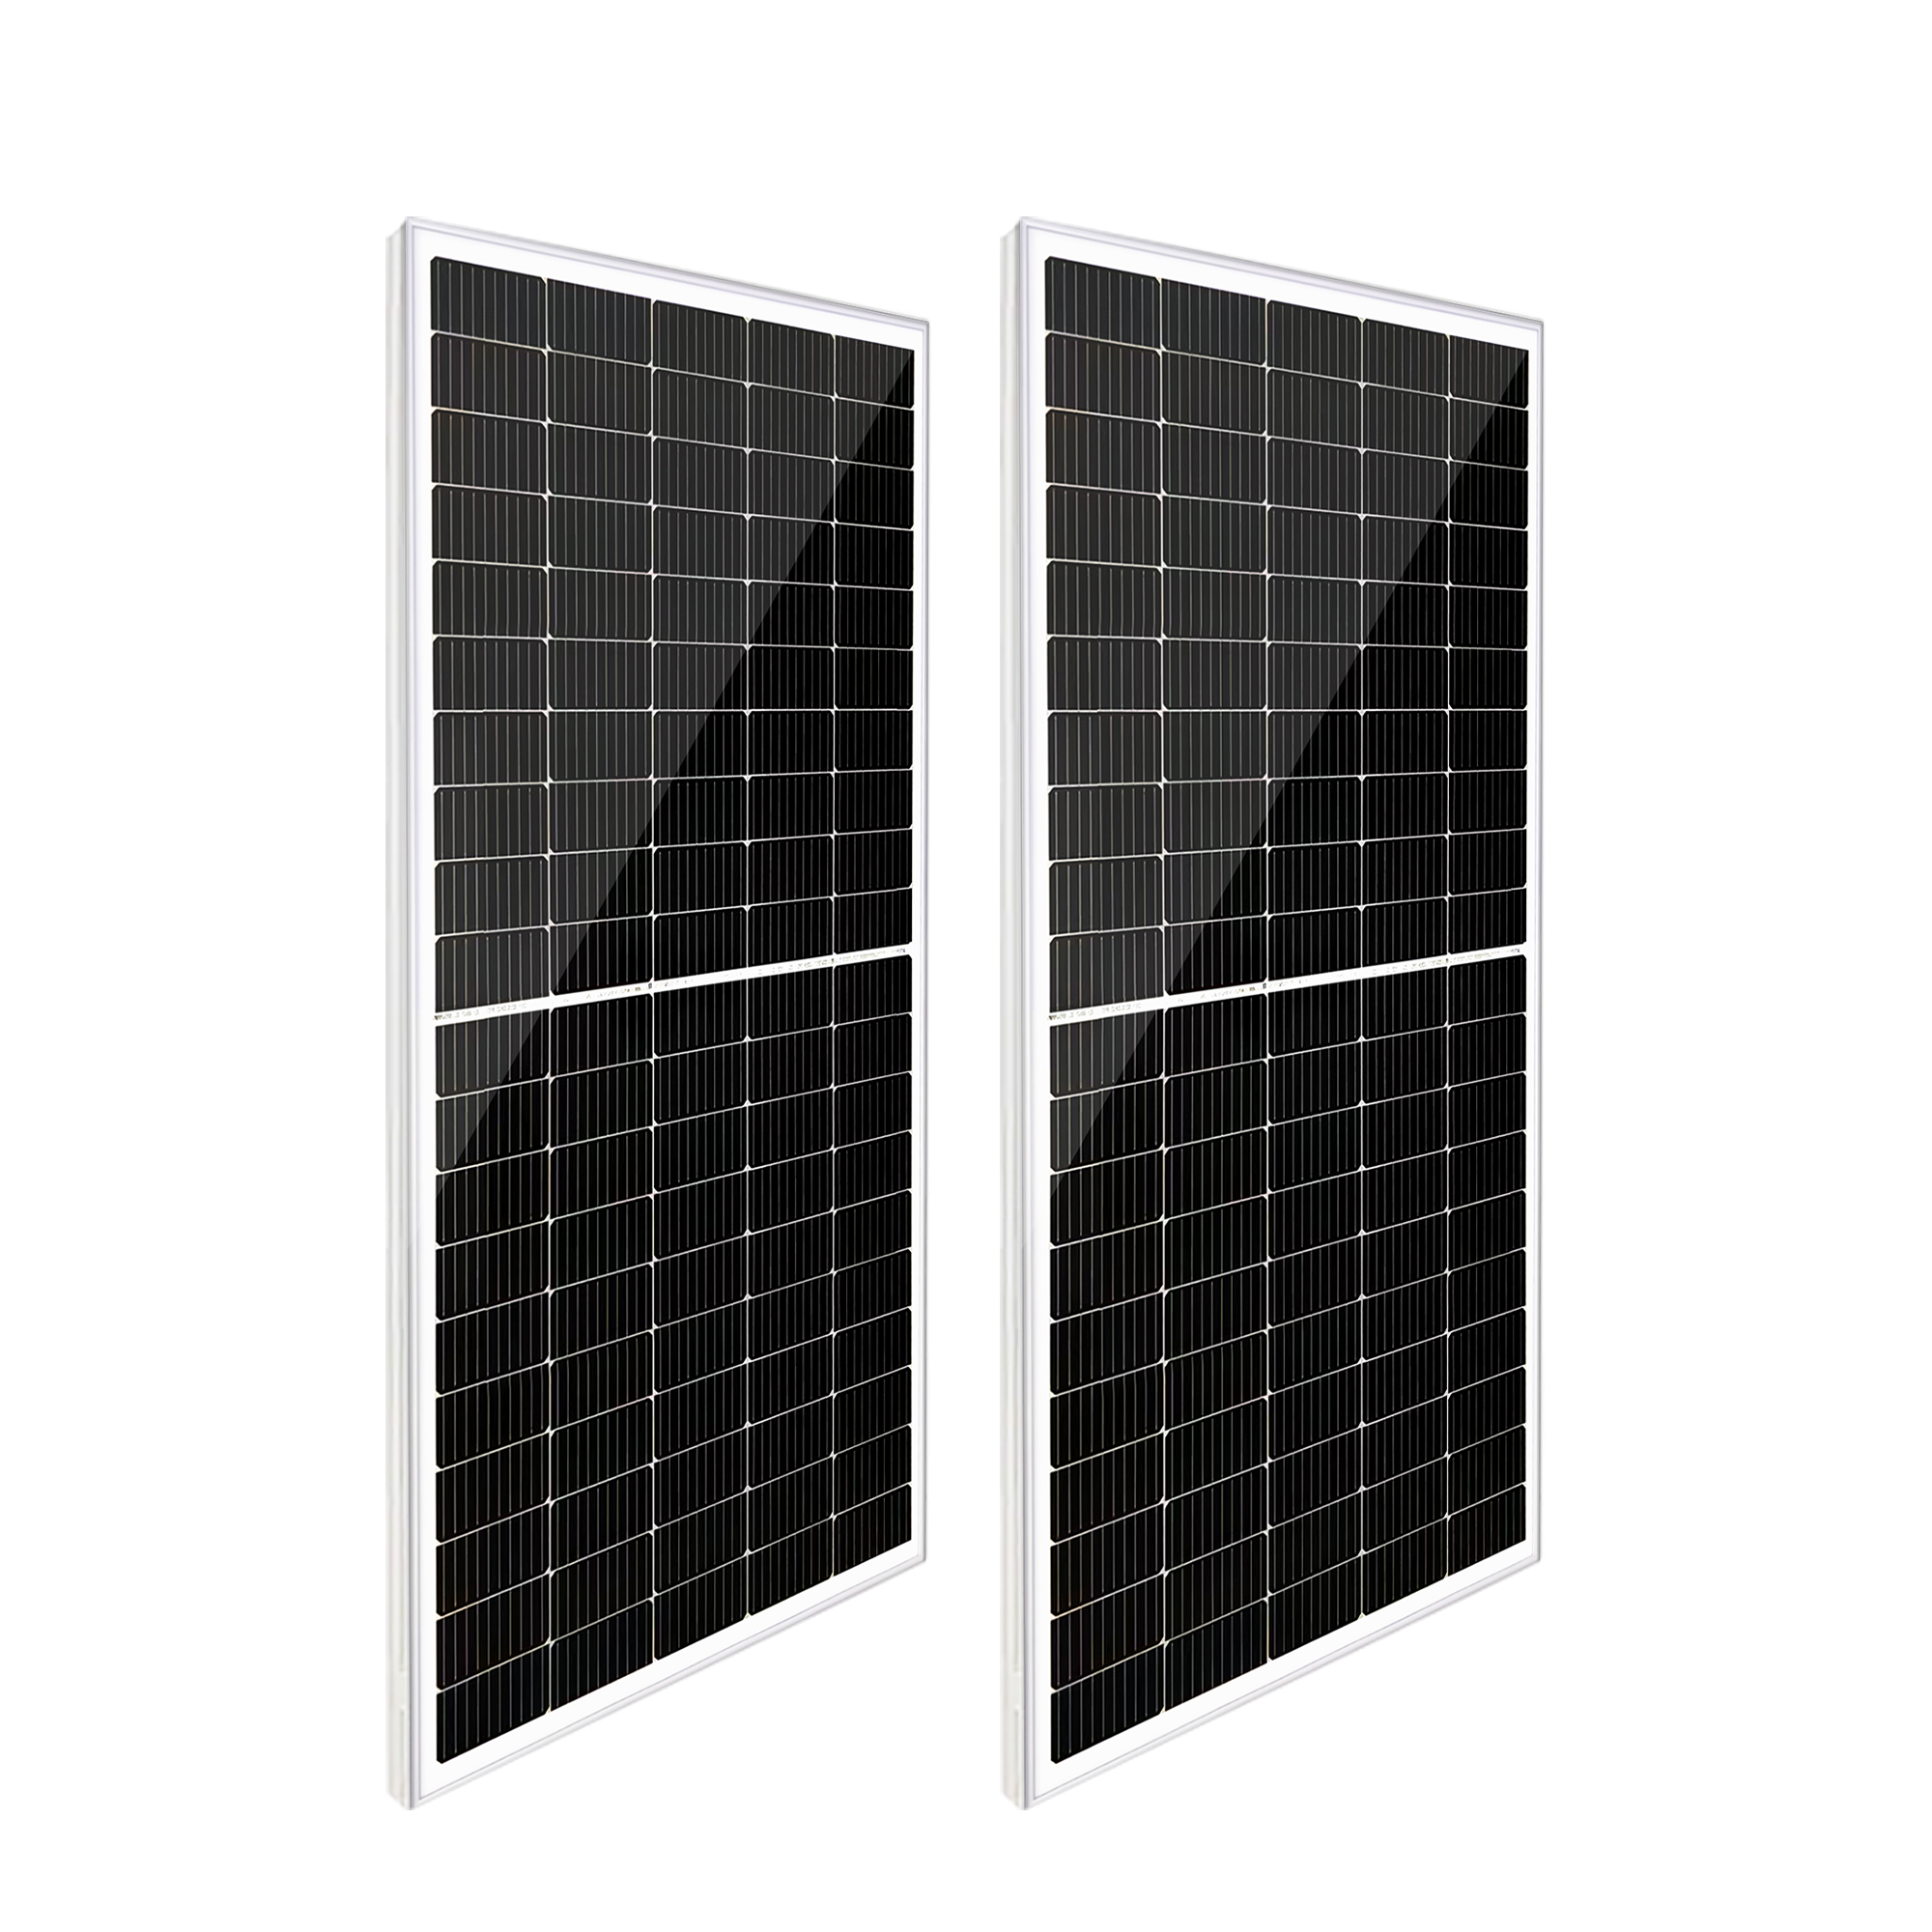 400W Mono Half Cell Solar Panel Cworth energy